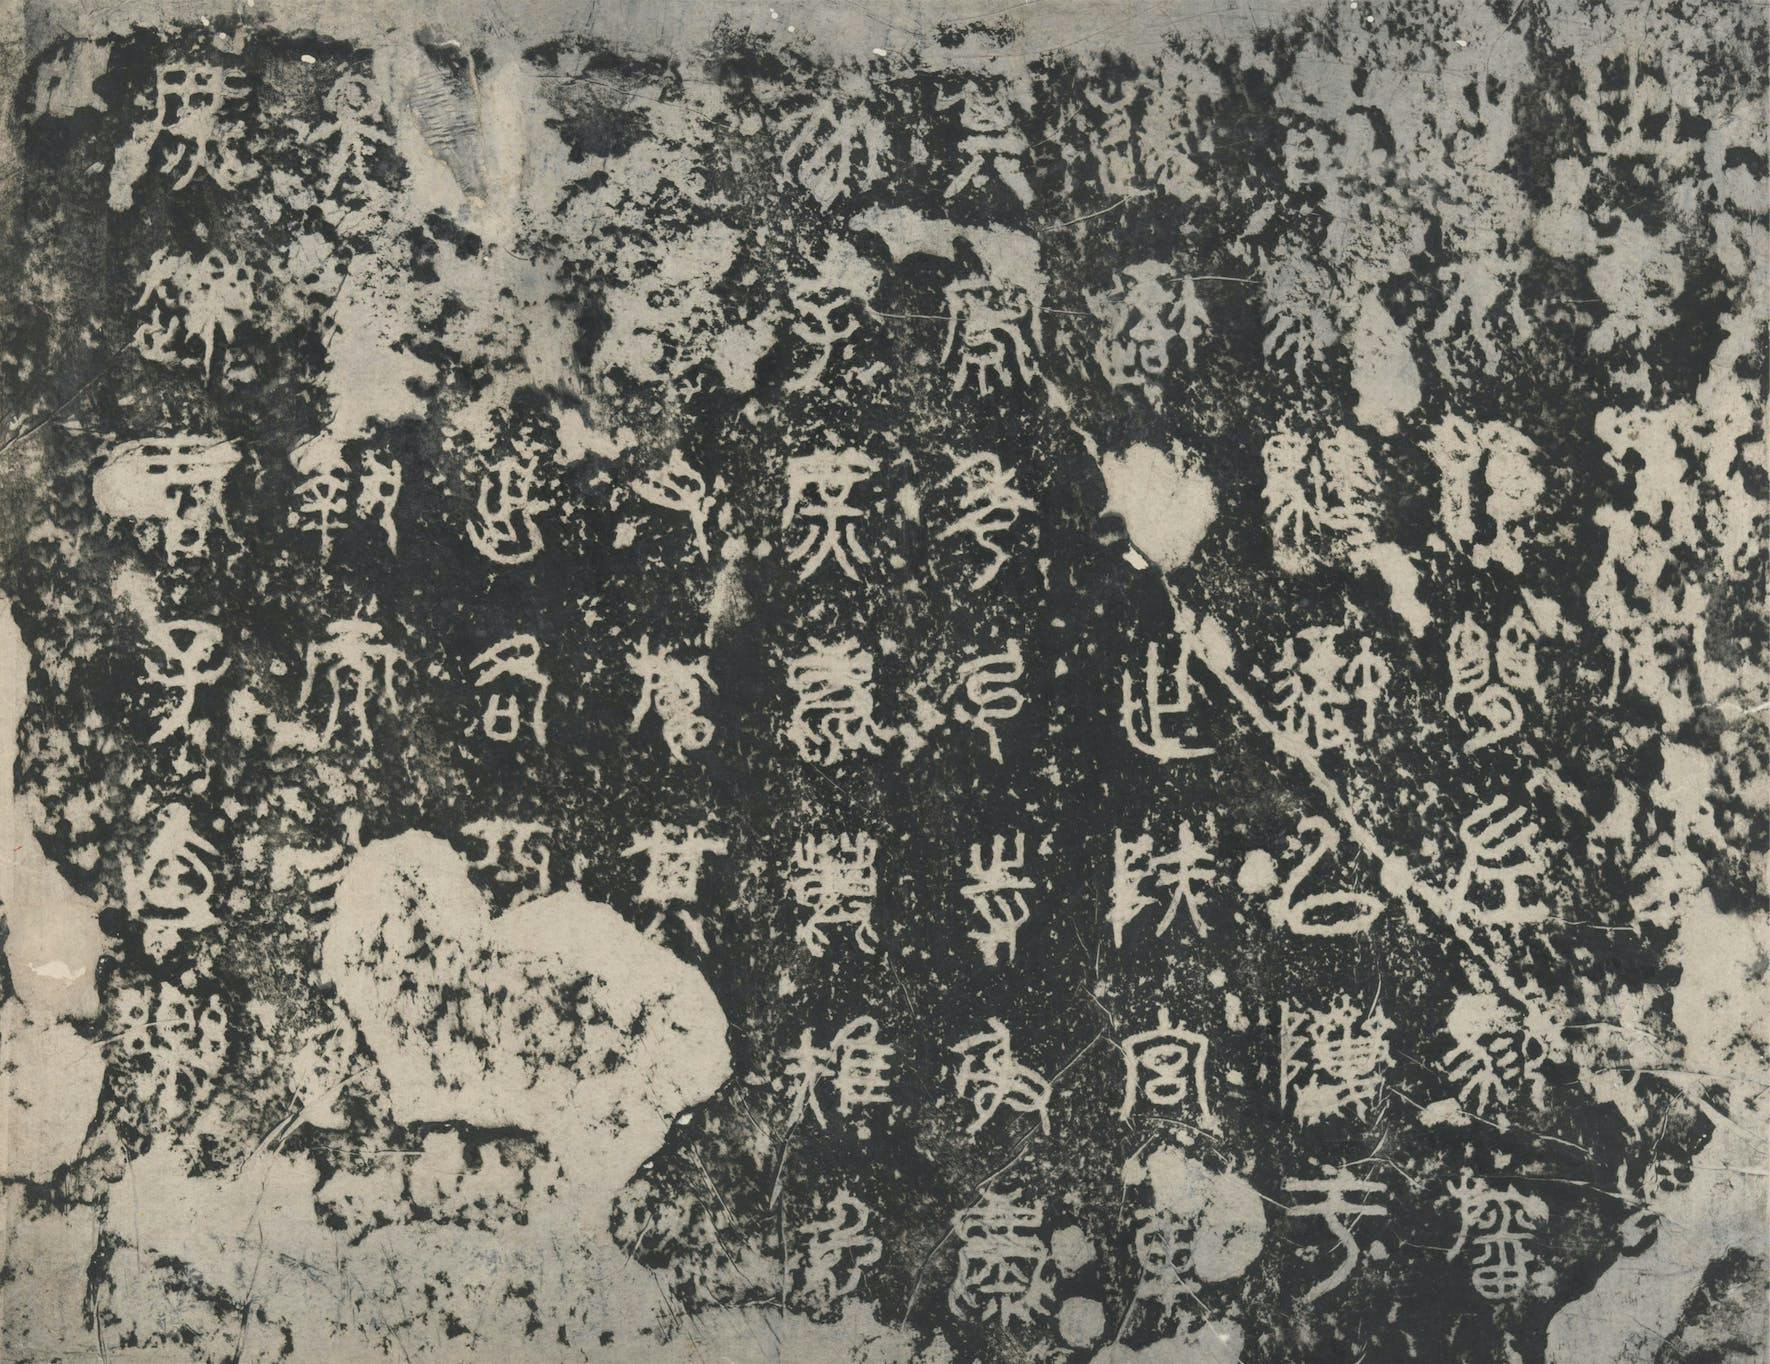 Ep. 17 | The Eastern Zhou Dynasty